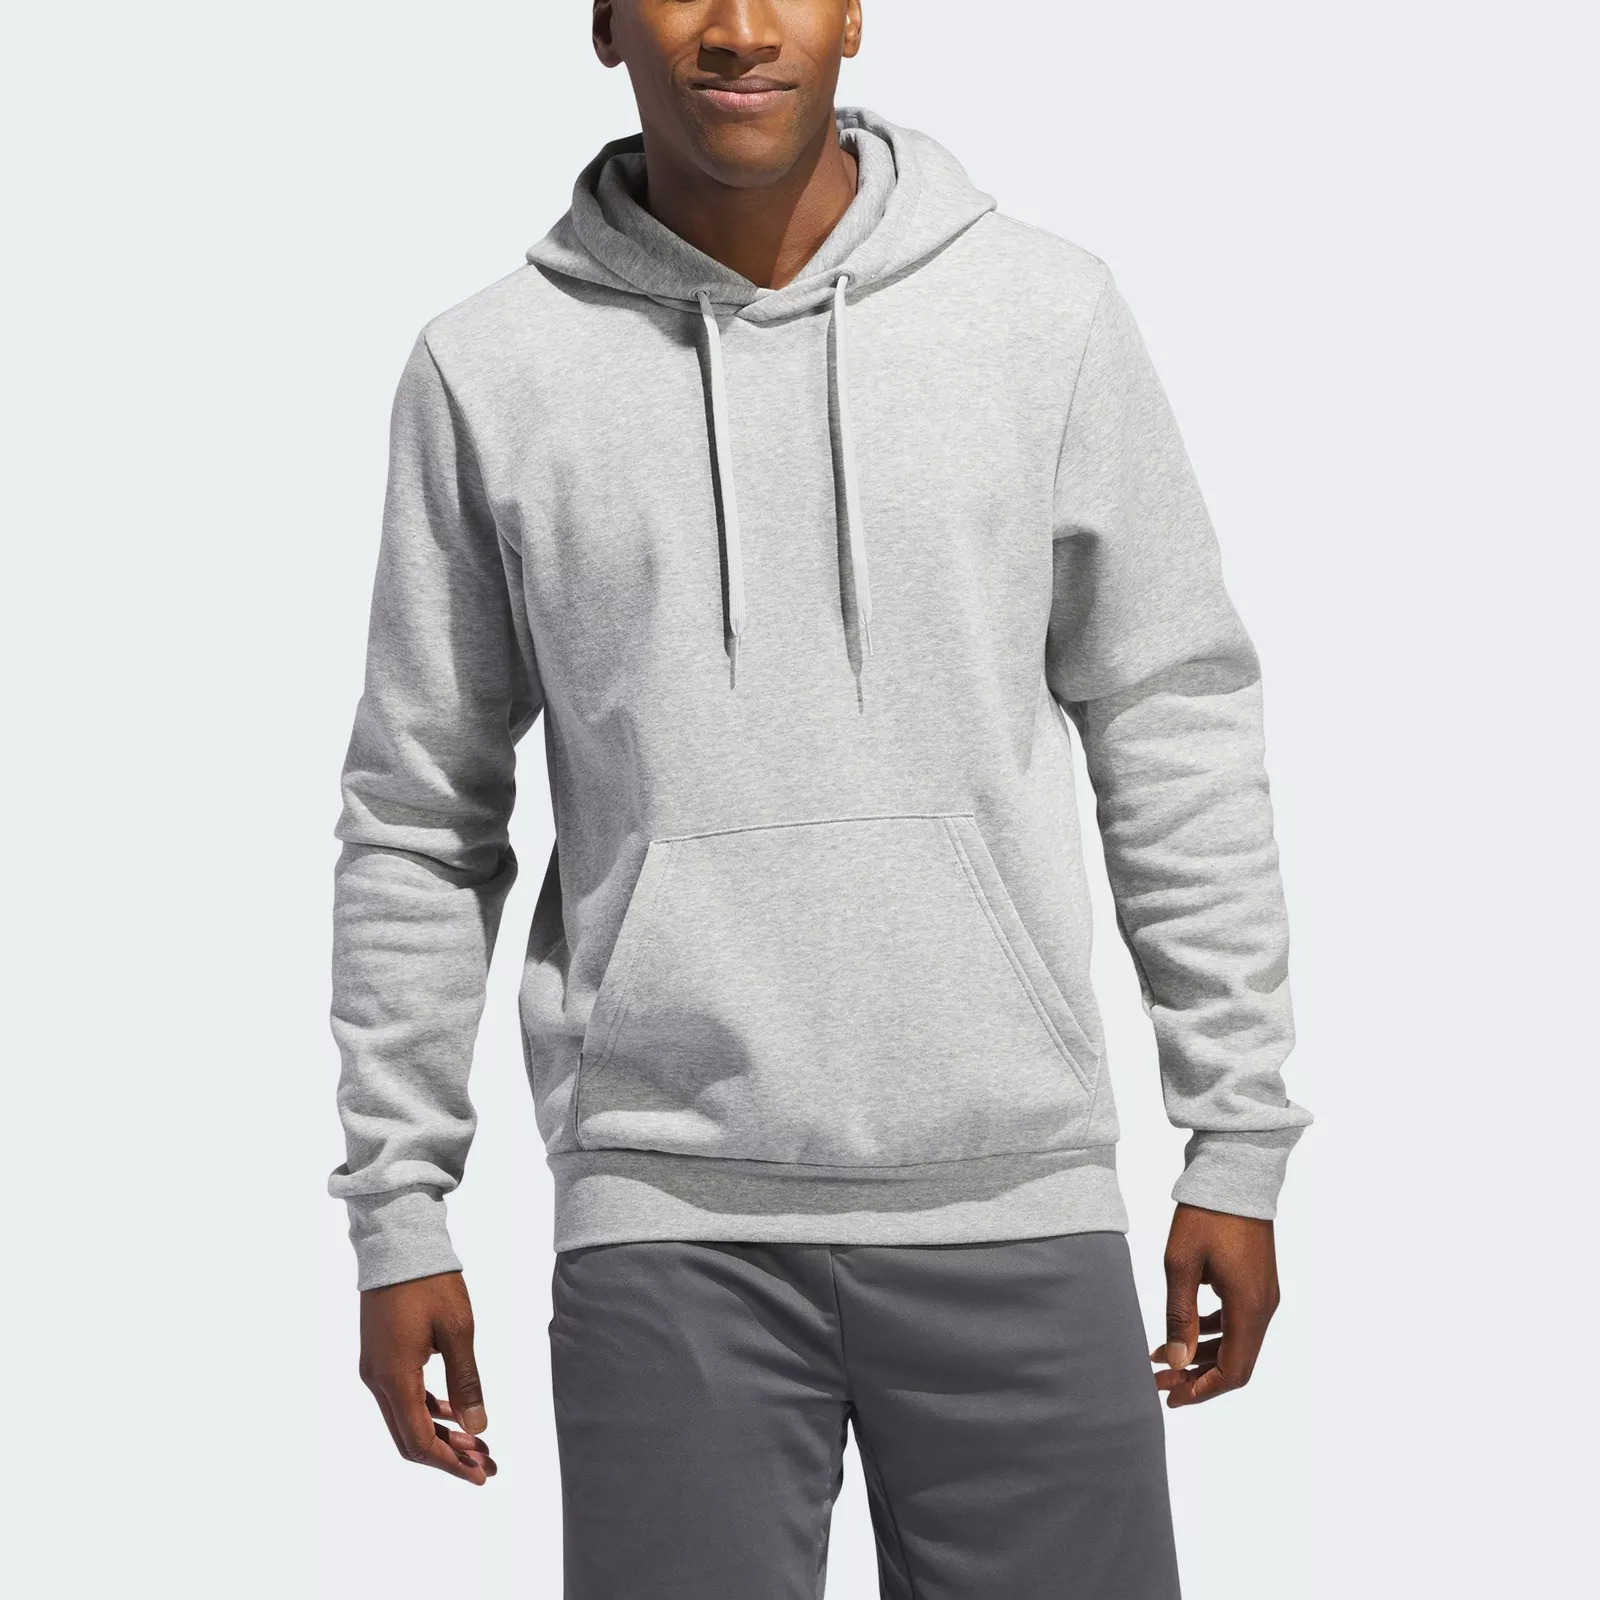 adidas Men's Fleece Hoodie (grey, Large only) $8.50 + Free Shipping